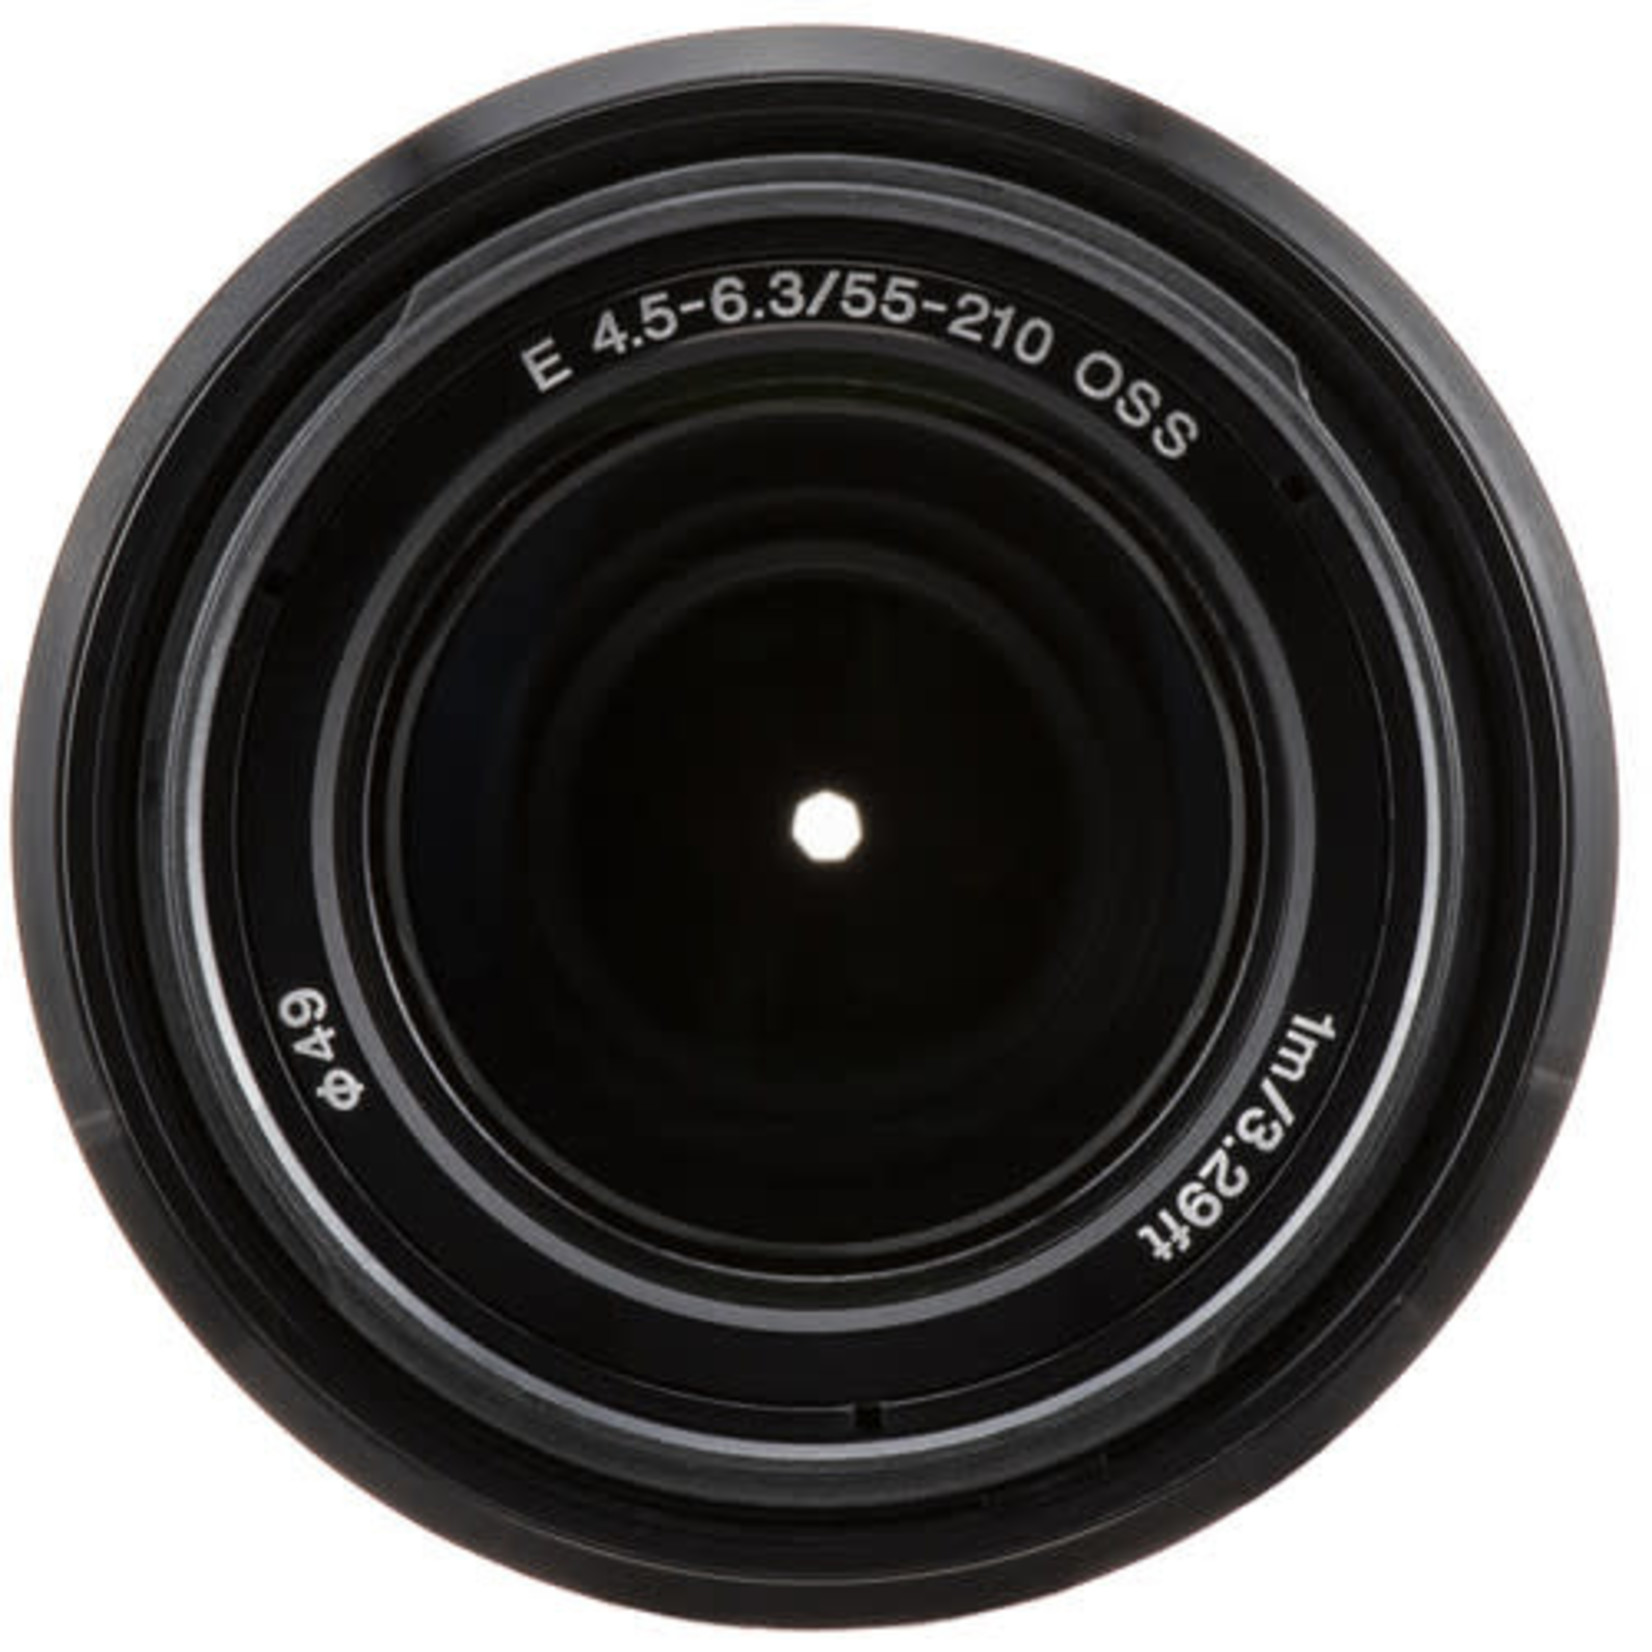 Sony E 55-210mm f/4.5-6.3 OSS Lens - Stewarts Photo